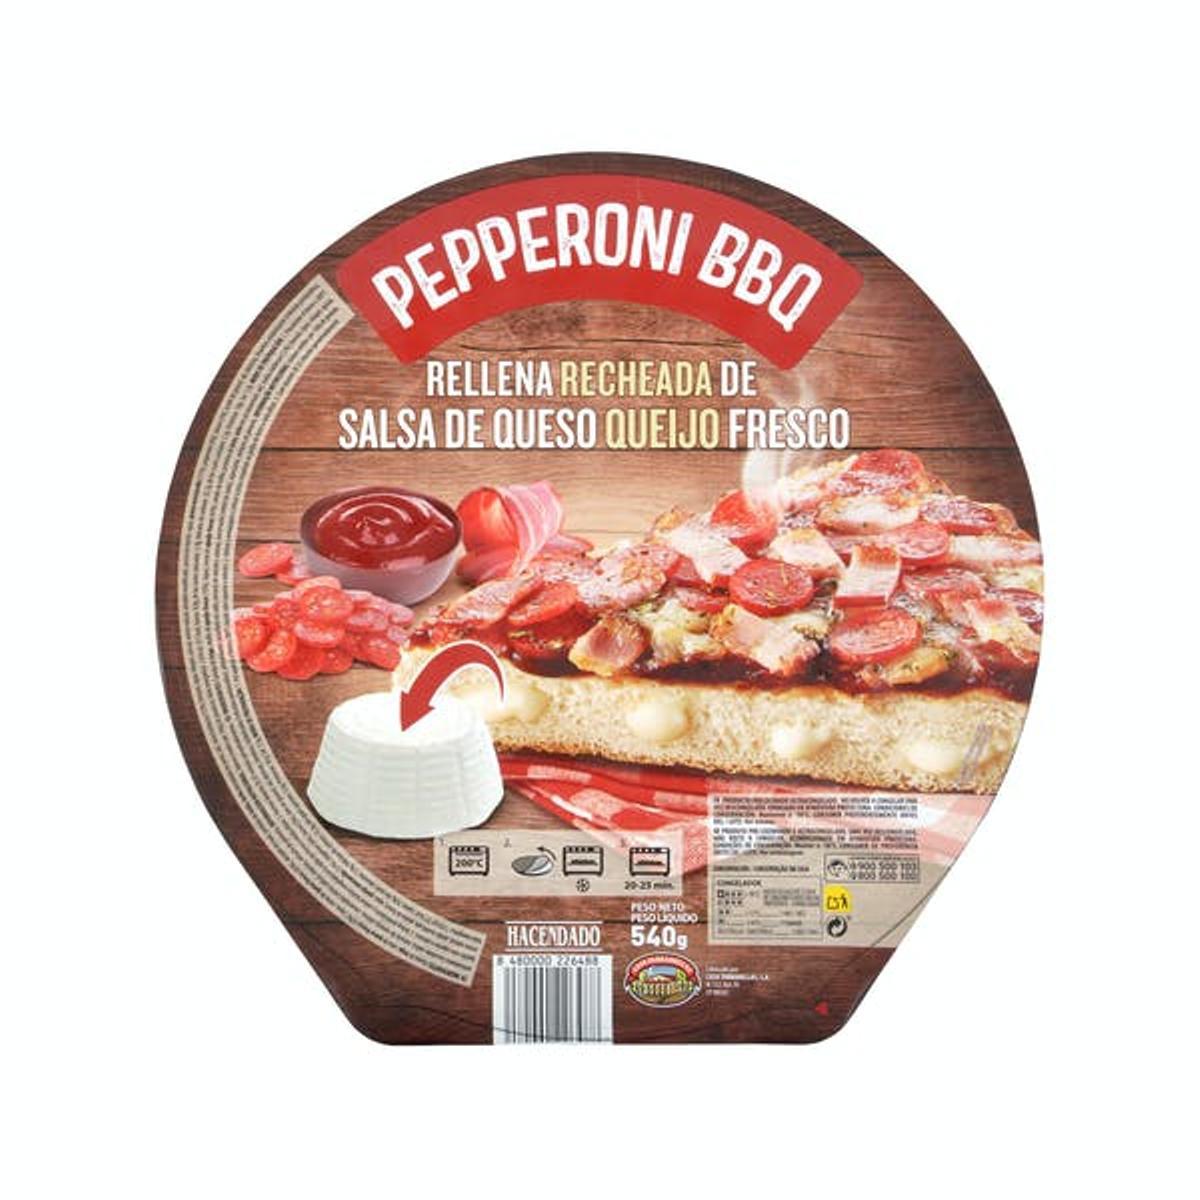 La nueva pizza de pepperoni de Mercadona.